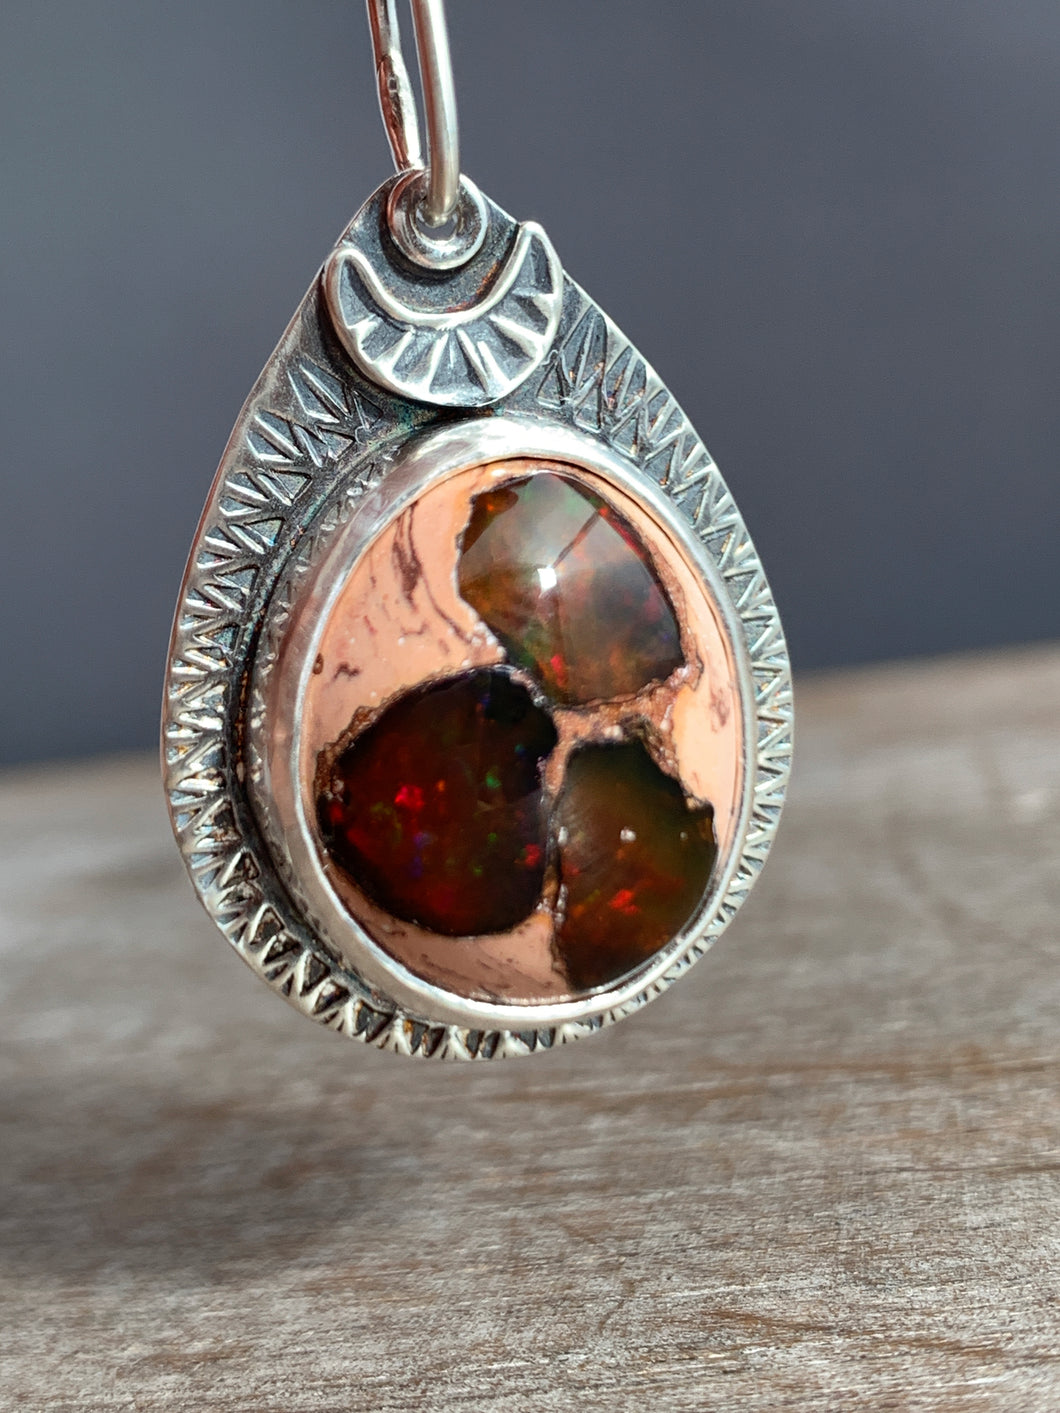 Mexican Opal Pendant